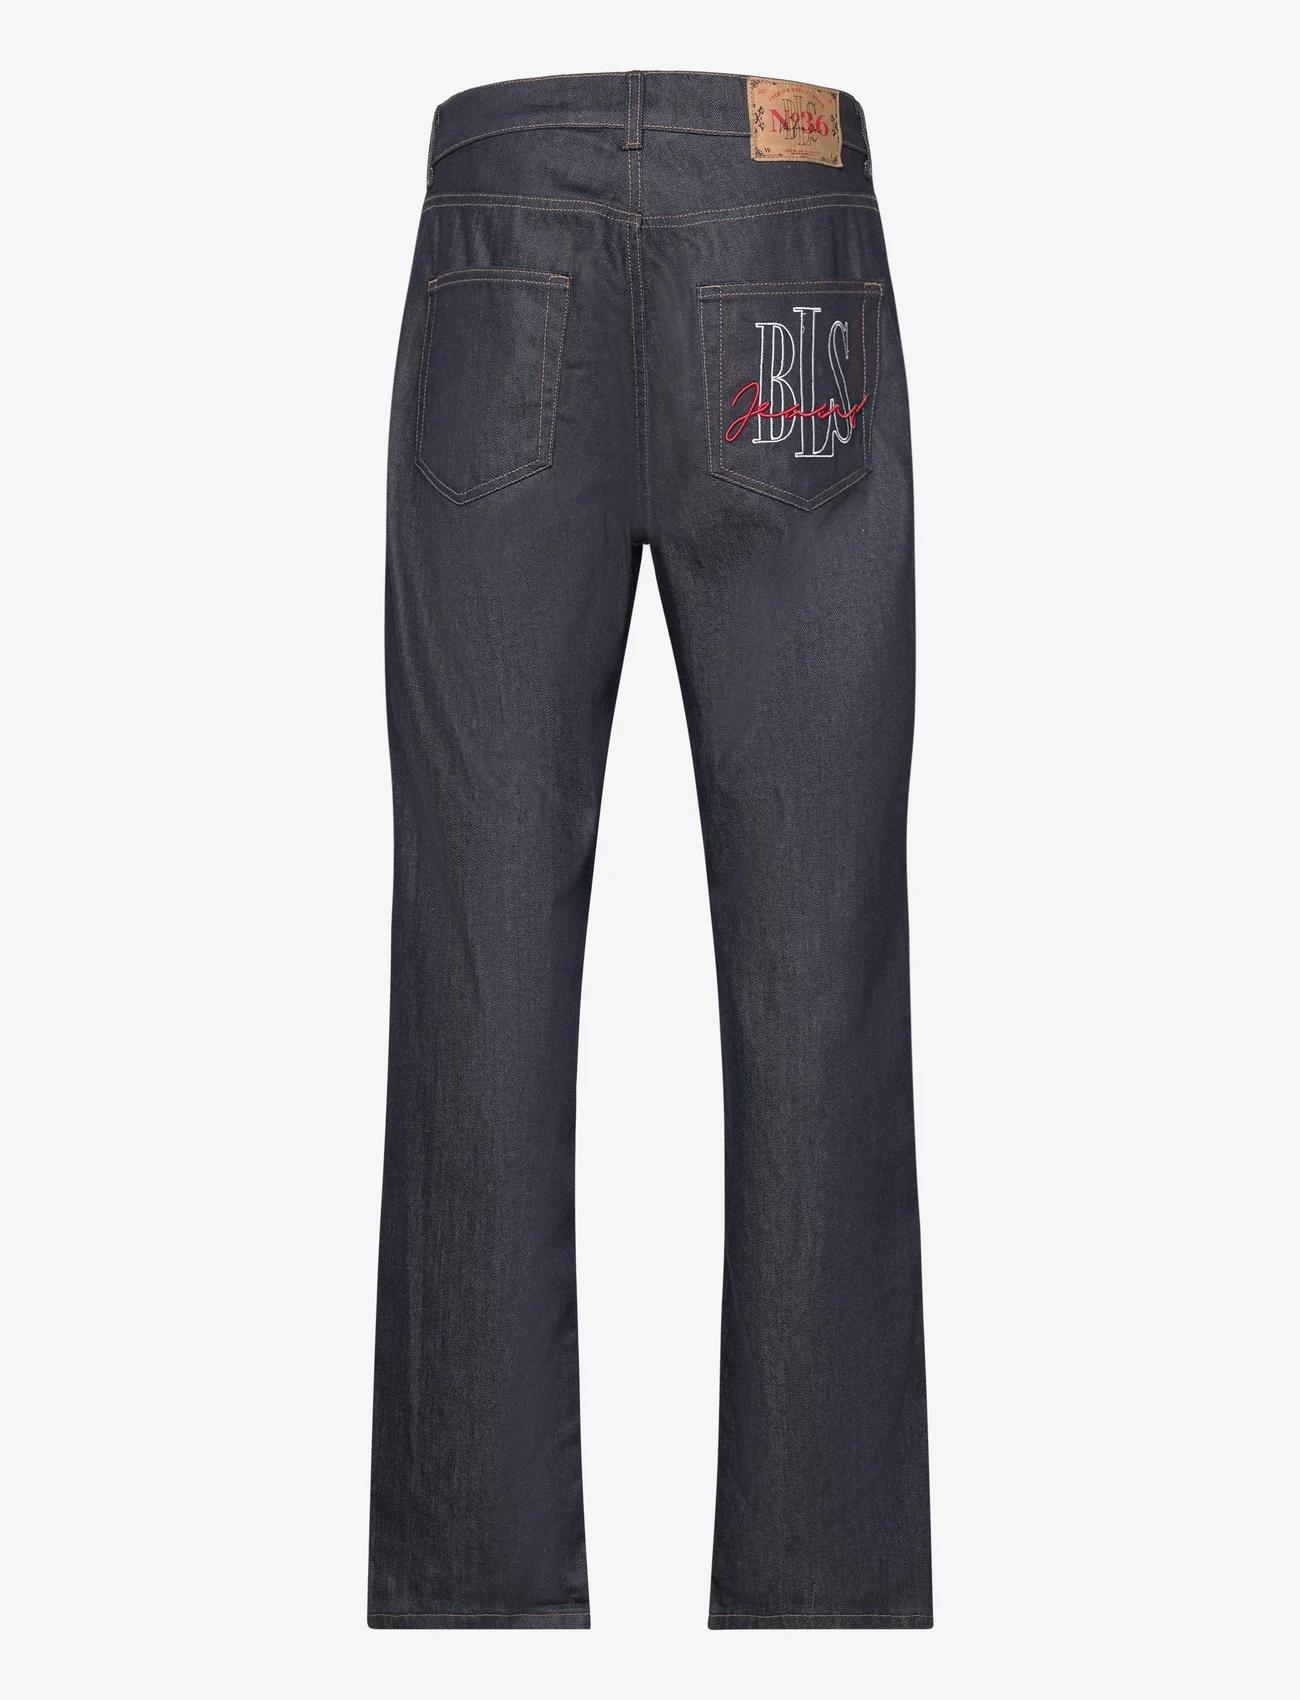 BLS Hafnia - Cursive Jeans - regular jeans - navy - 1